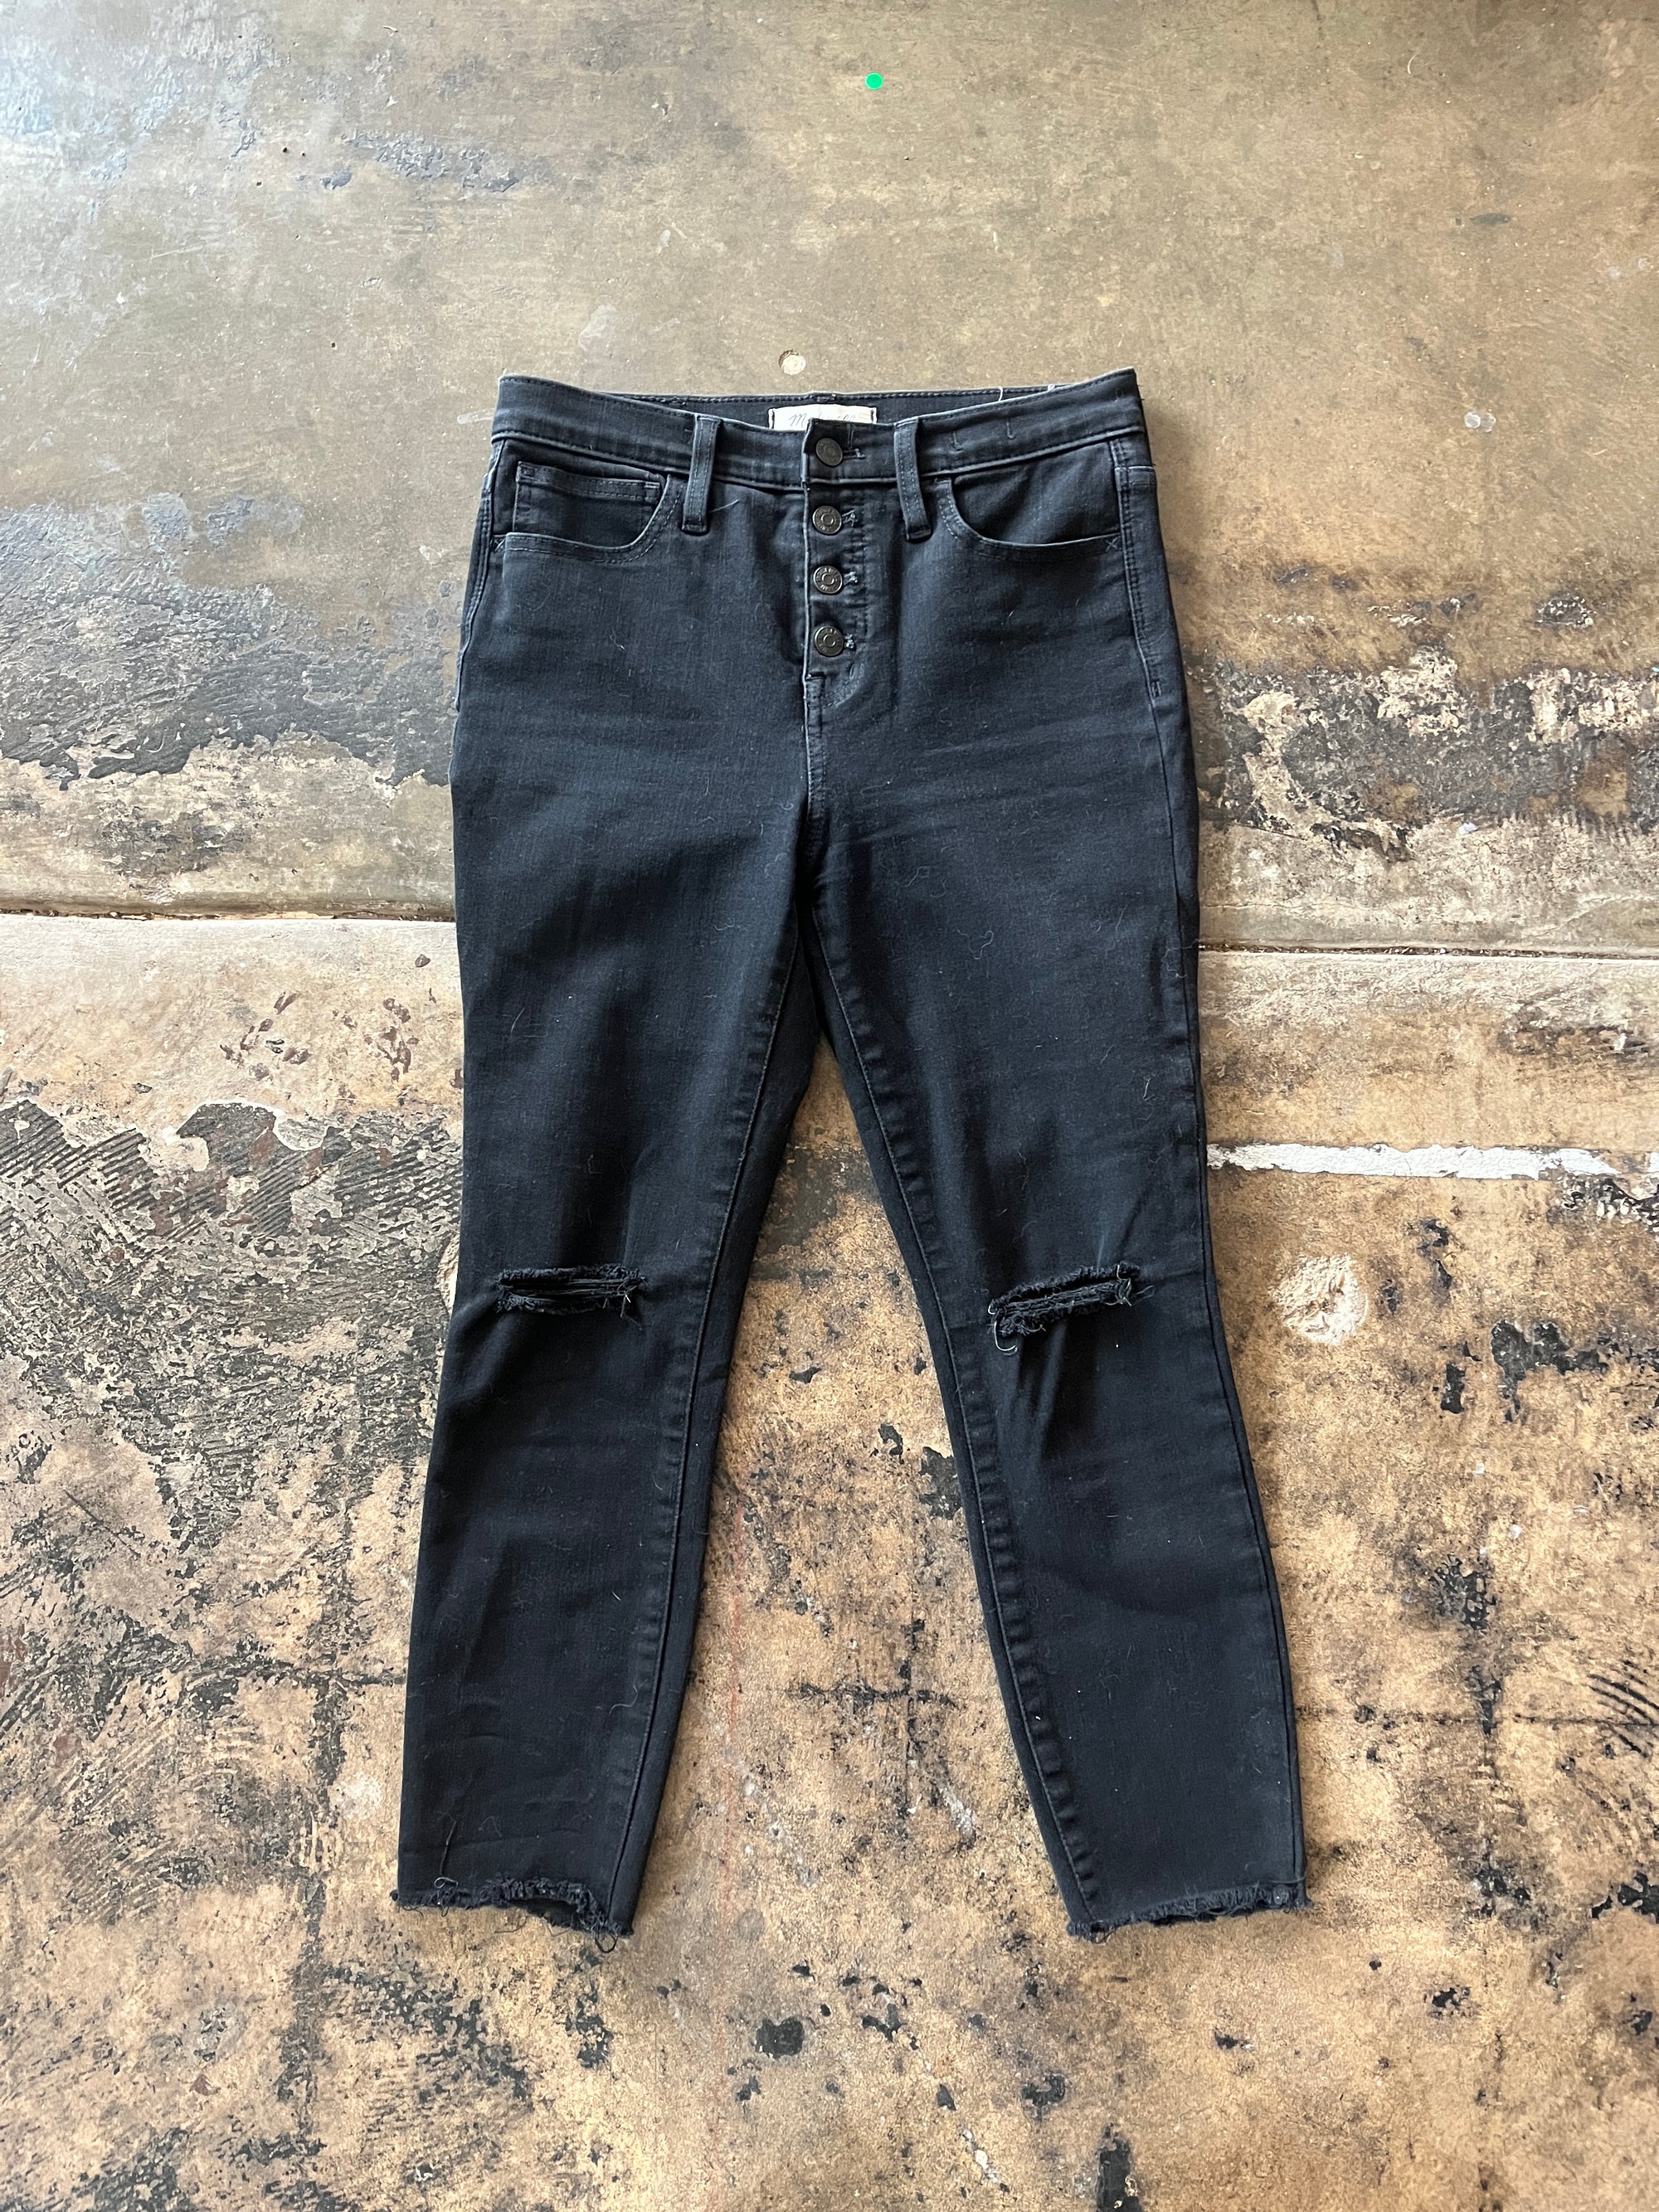 Madewell Distressed Black Skinny Jeans